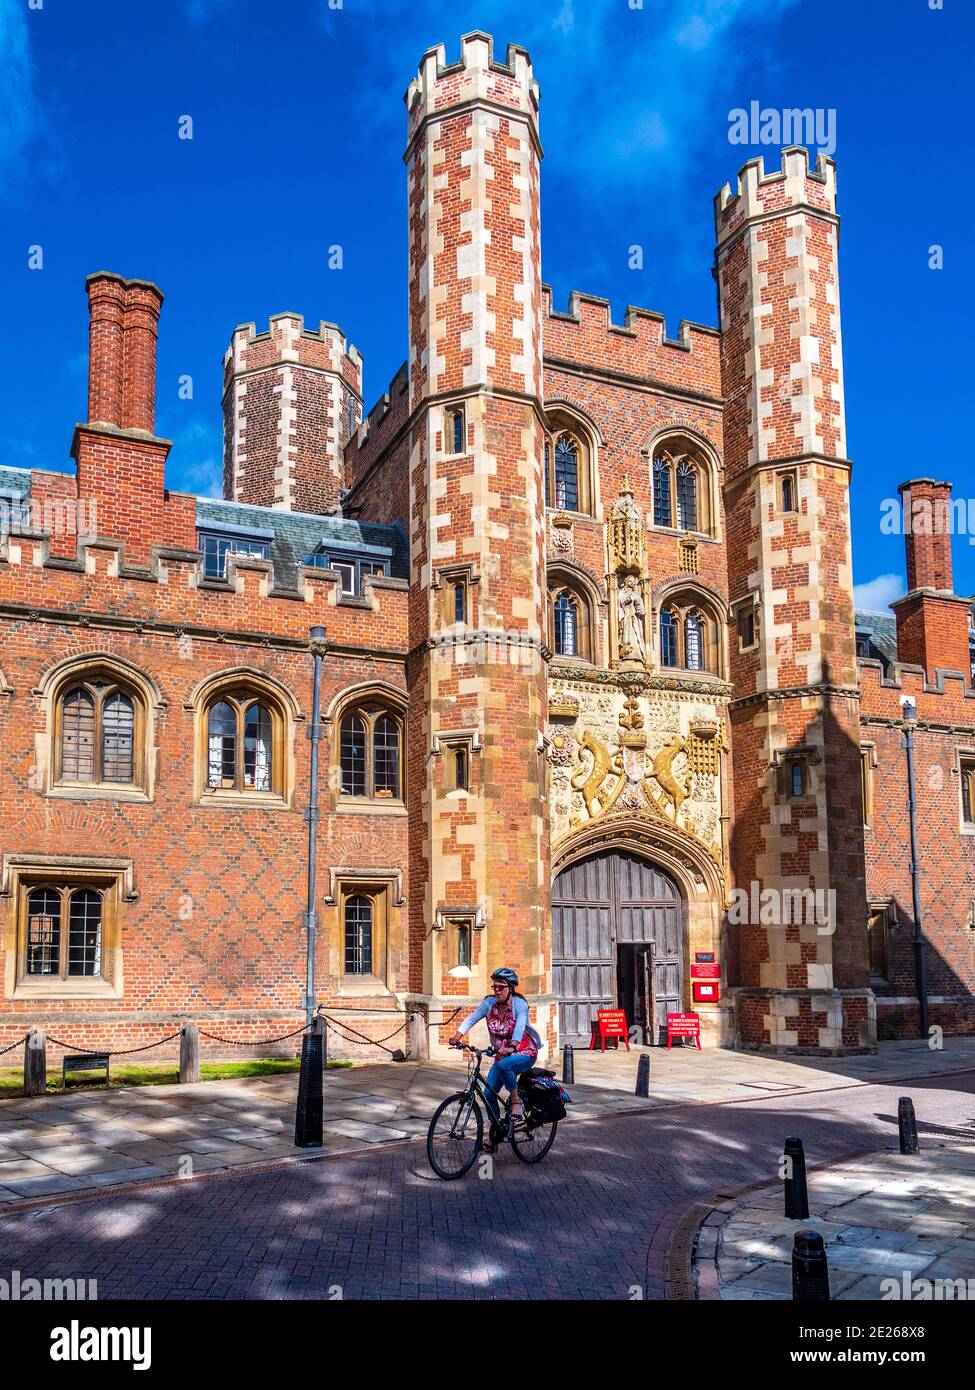 St John's College Cambridge - The Great Gate St John's College University of Cambridge -  Completed in 1516. Cambridge Tourism / Historic Cambridge. Stock Photo